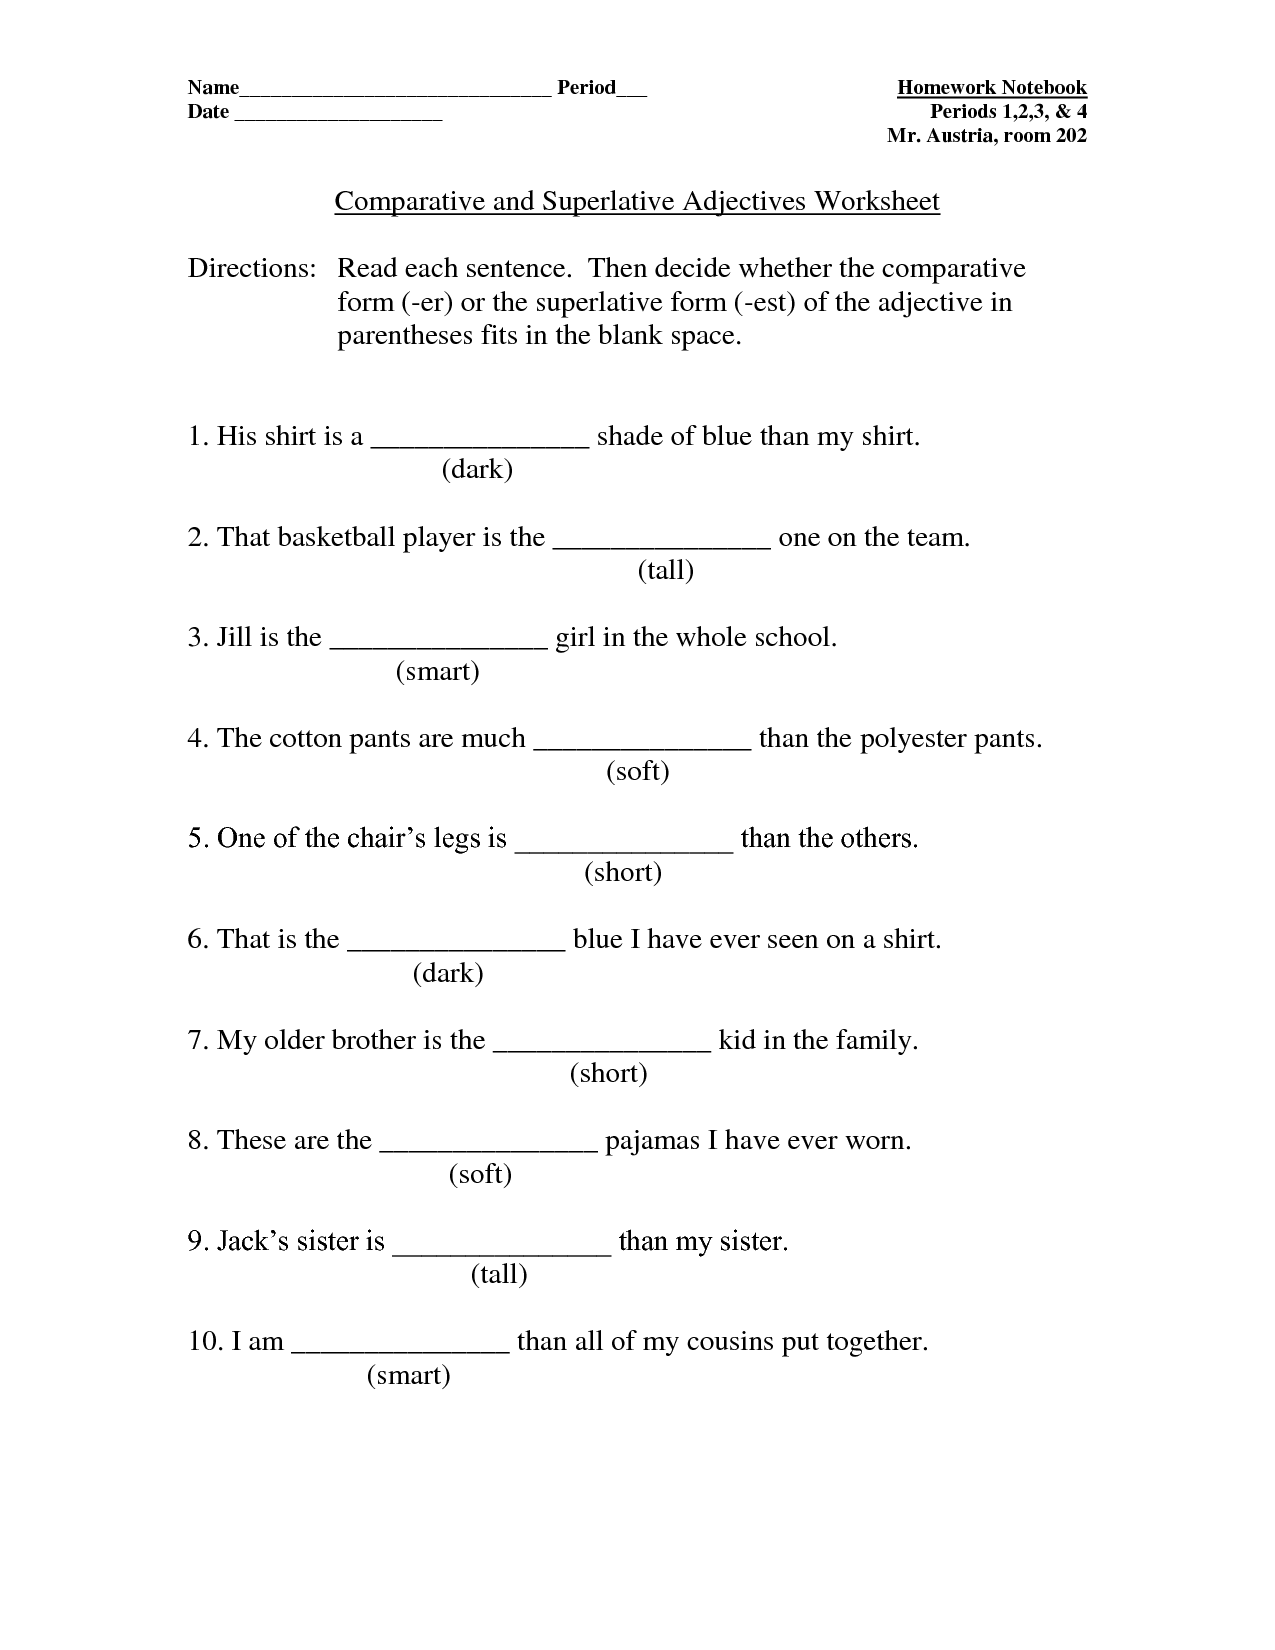 15-best-images-of-pronoun-worksheets-pdf-relative-pronouns-worksheets-direct-object-pronouns